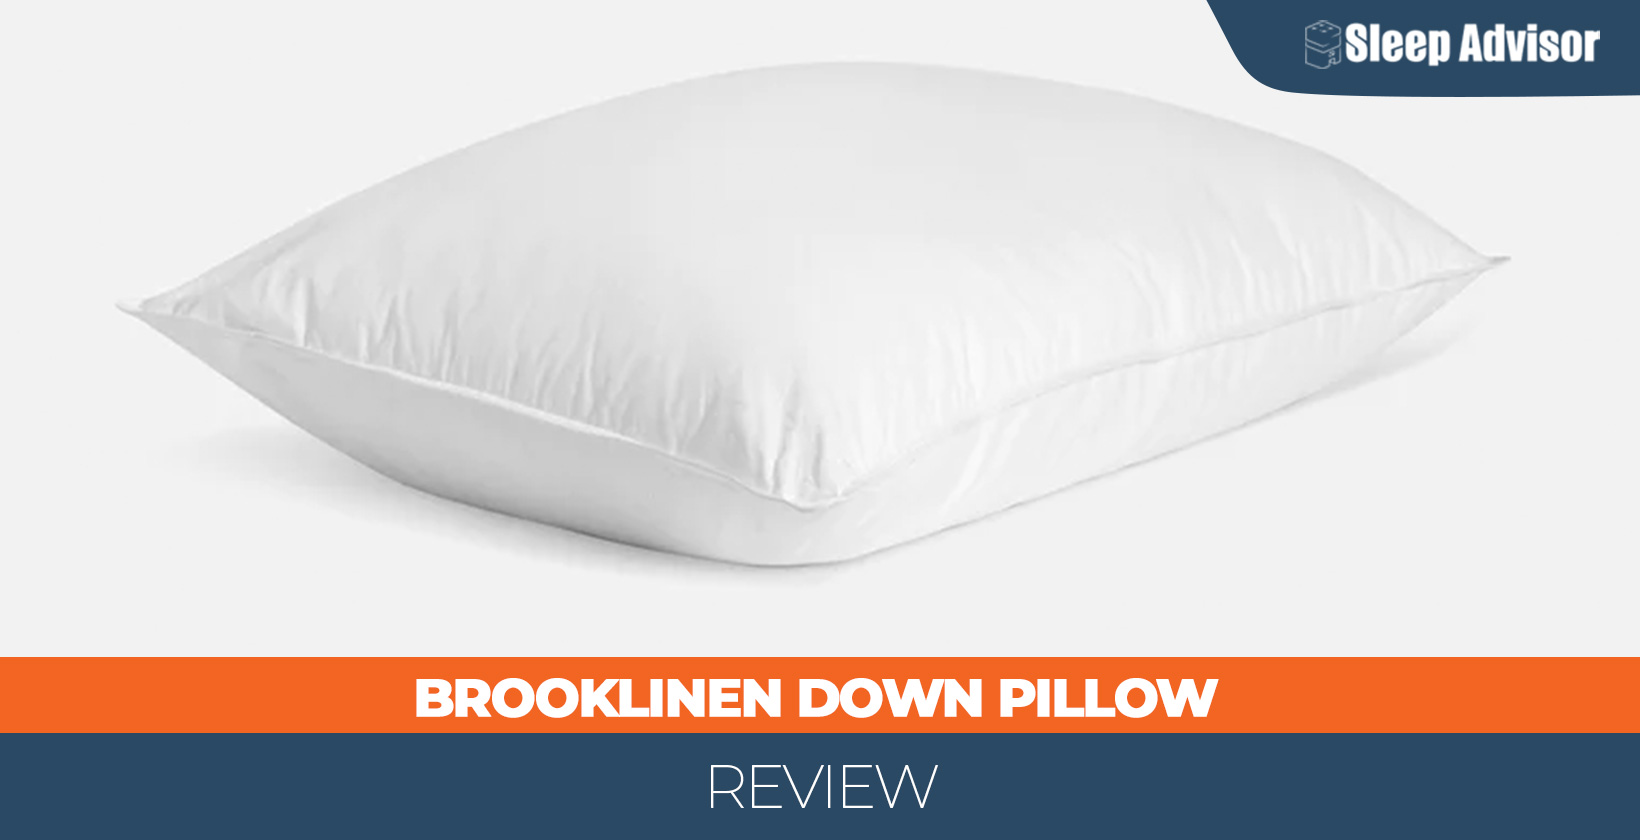 Brooklinen Down Pillow Review in depth